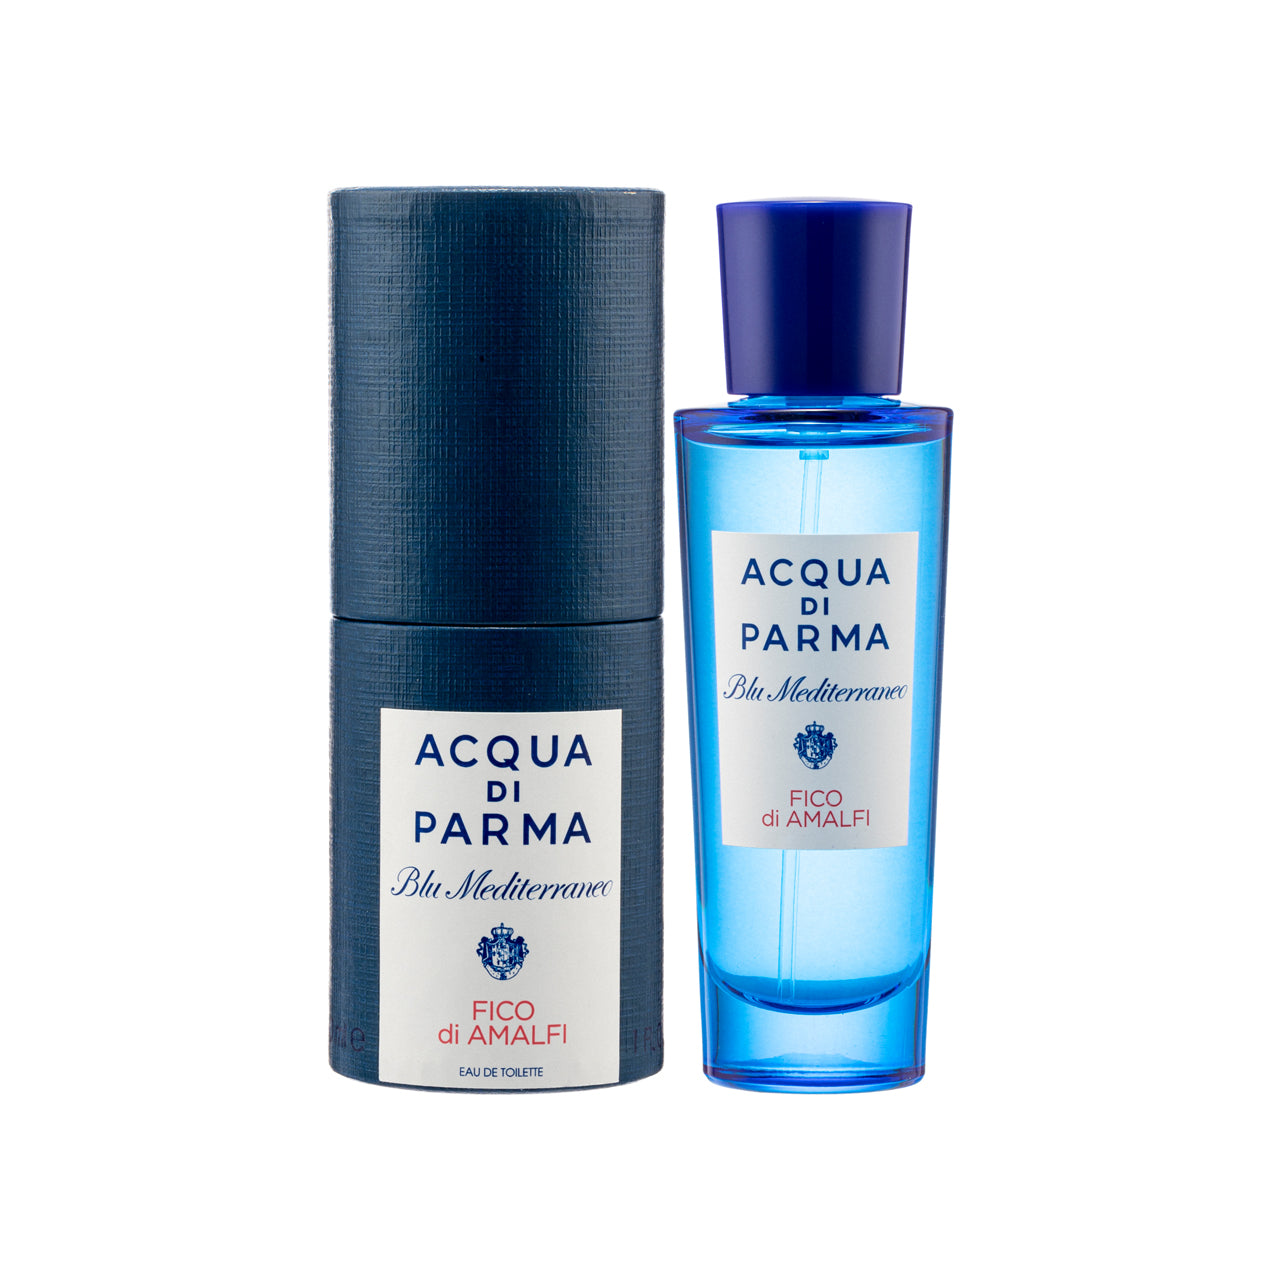 Acqua Di Parma Blu Mediterraneo Fico Di Amalfi Eau De Toilette Spray 30ml